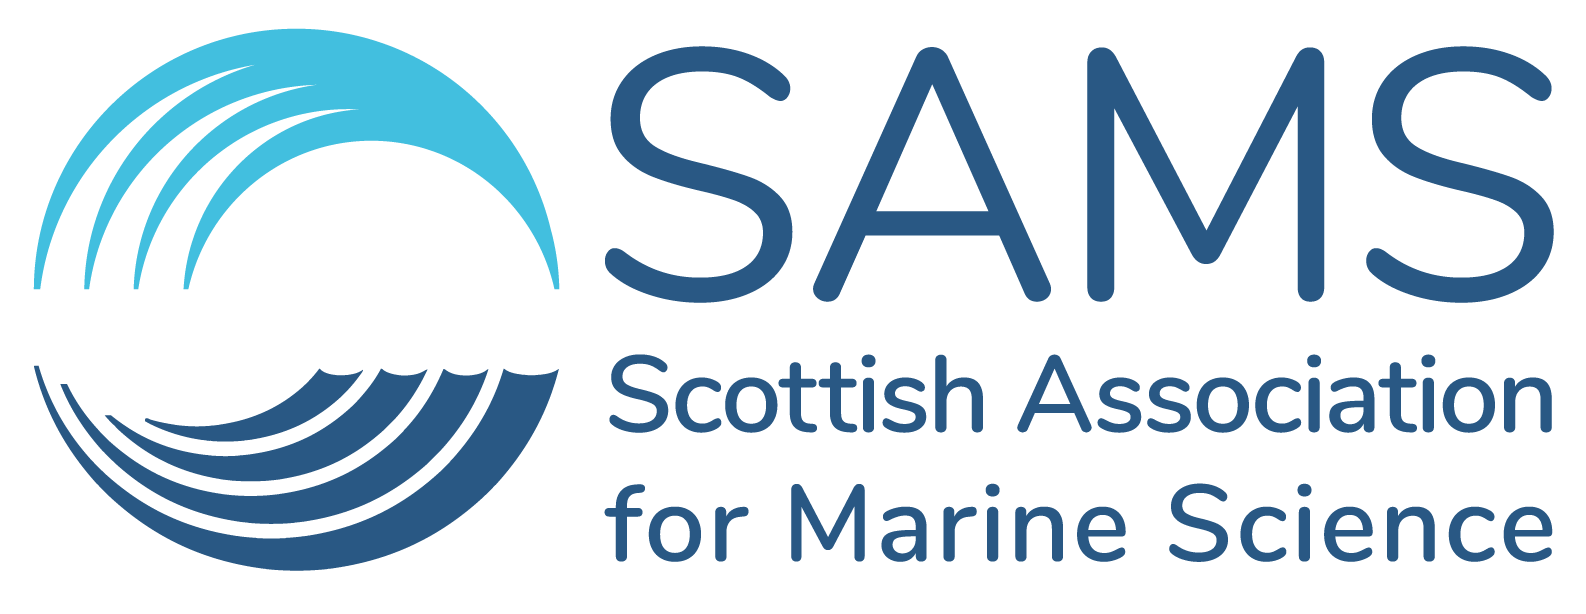 Scottish Association for Marine Science (SAMS)